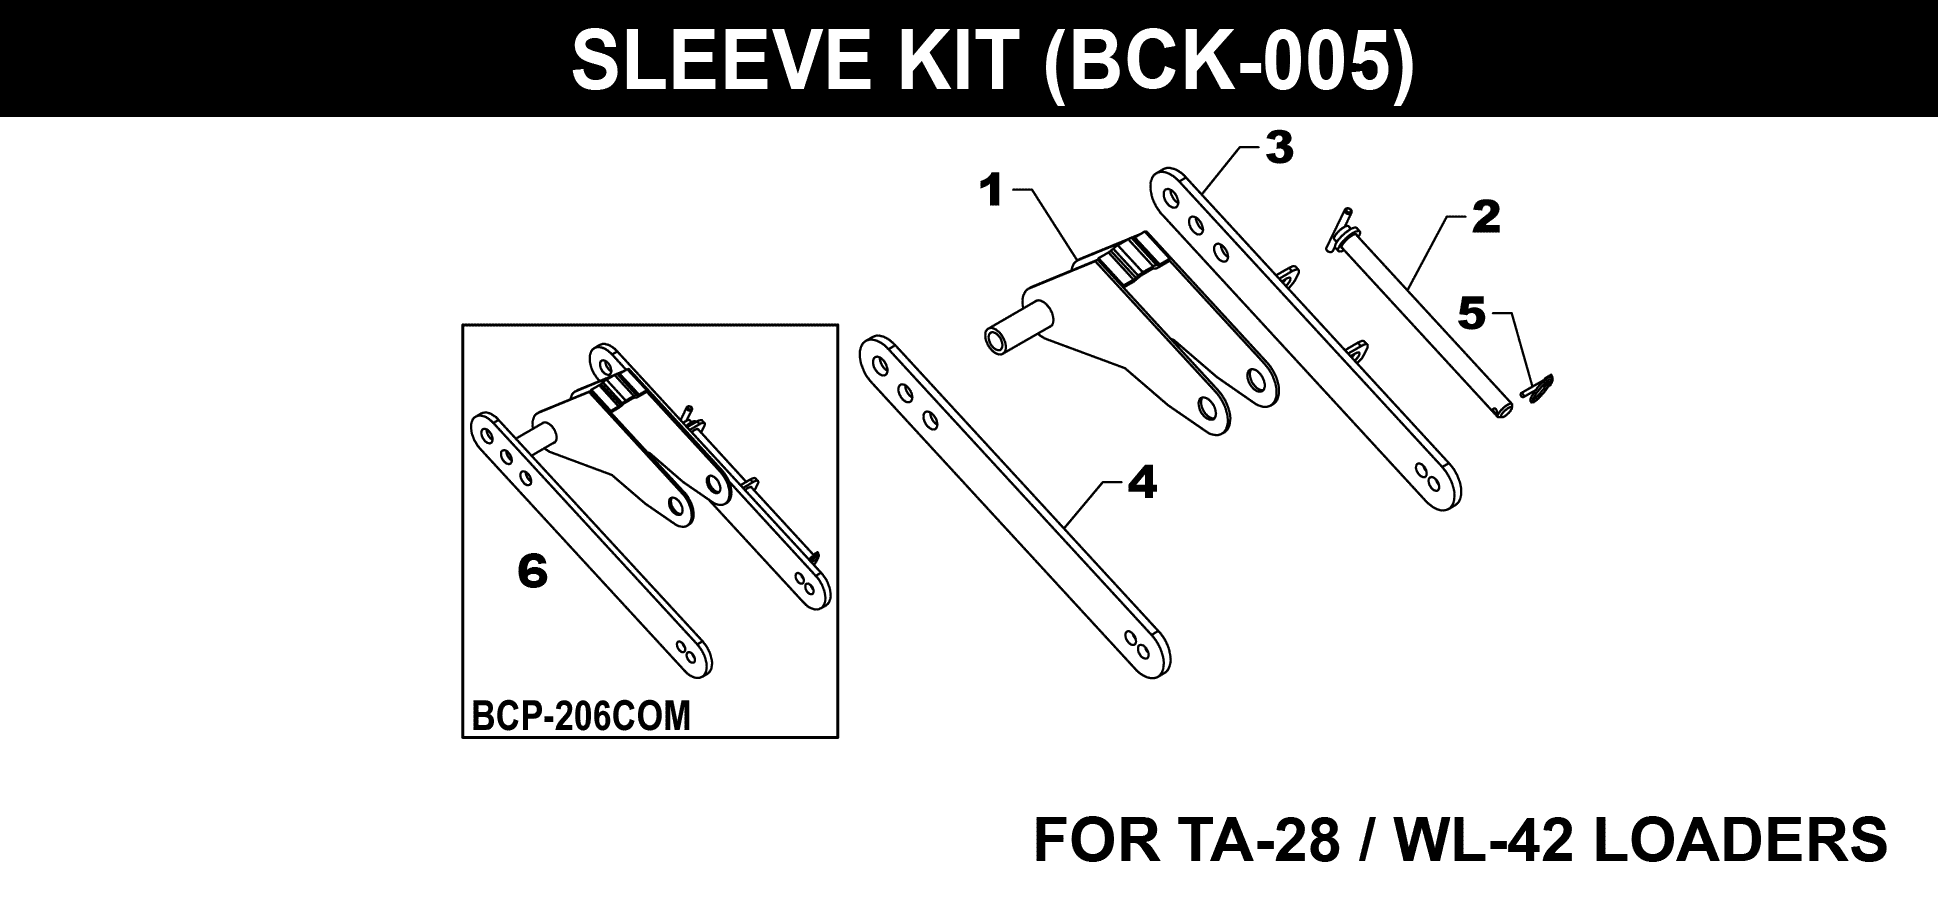 BCK-005 Sleeve Kit